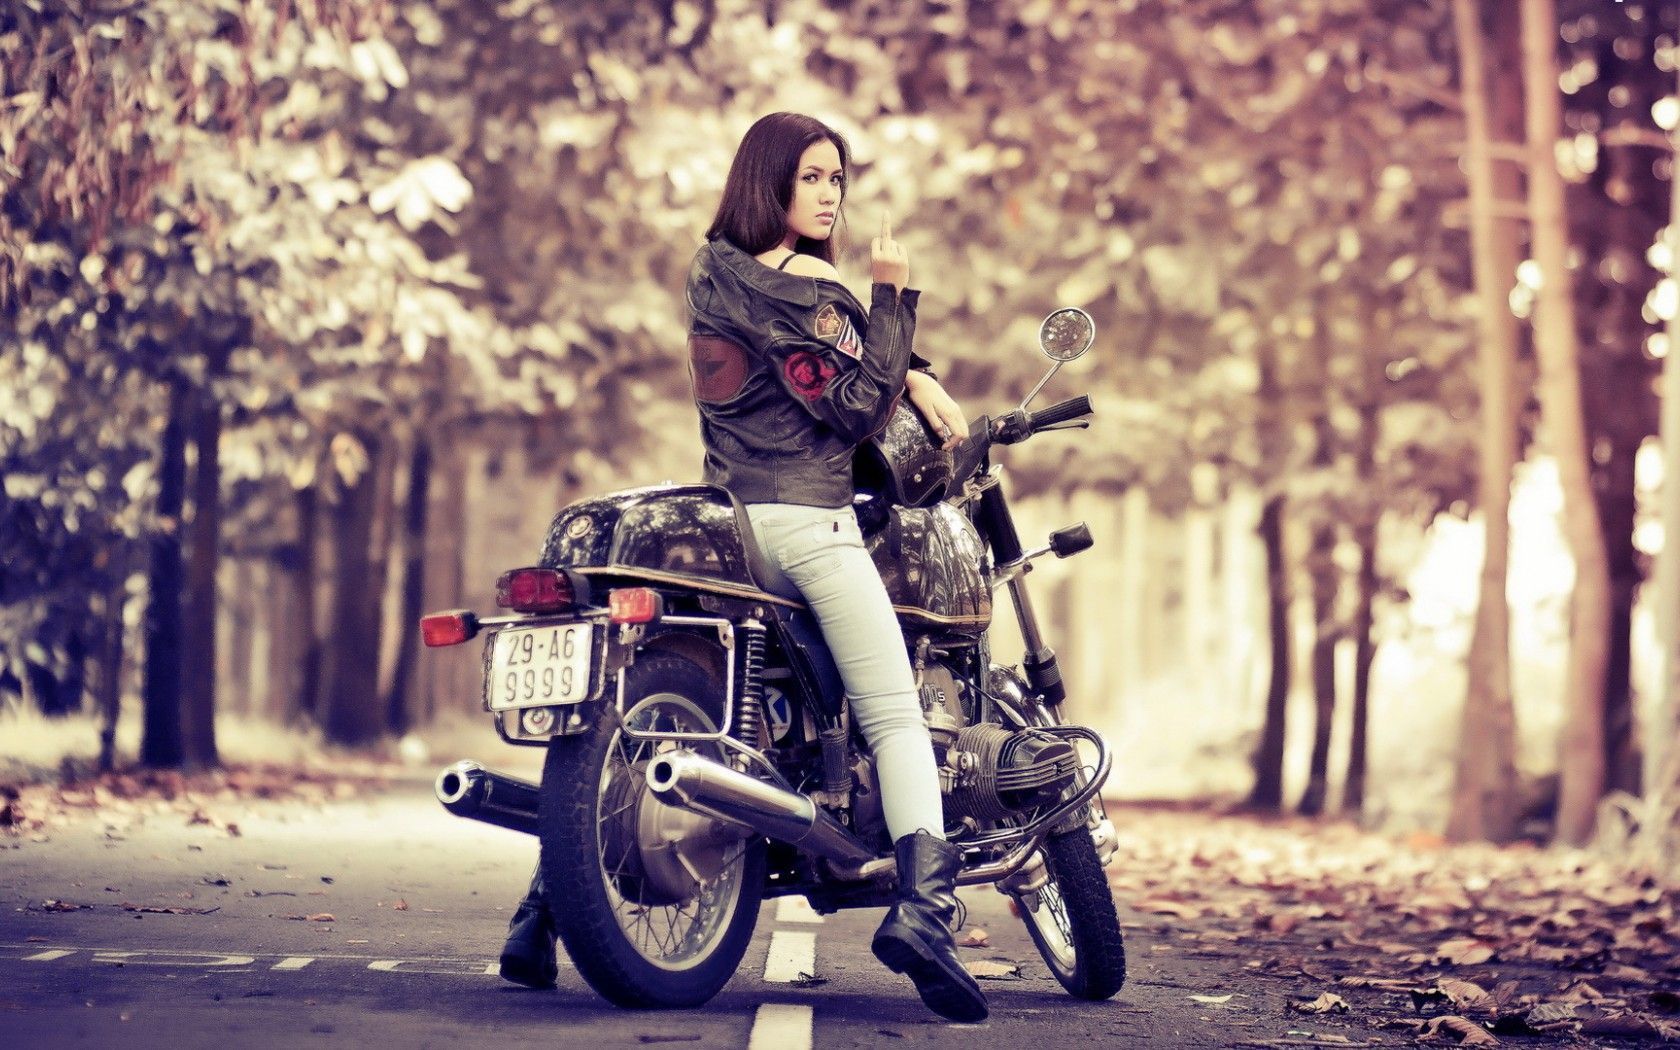 Download 1680x1050 pix photo of girl, motorcycle, background Wallpaper. Motorcycle, Motorcycle girl, Cafe racer girl